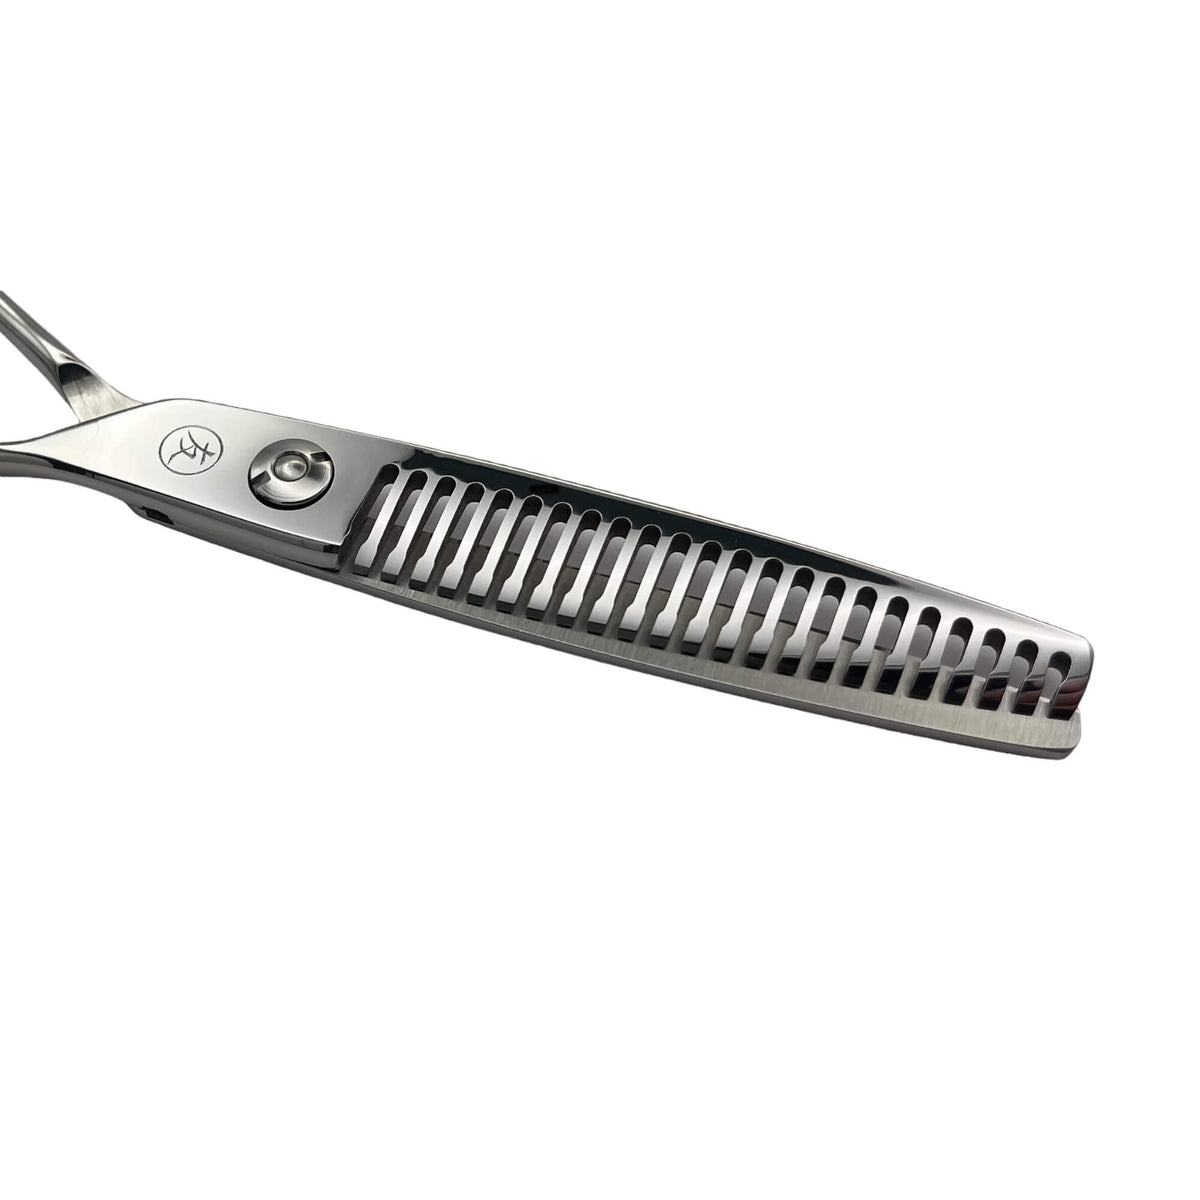 AK TXSF Texturising Scissors and Texturising Shears close up teeth